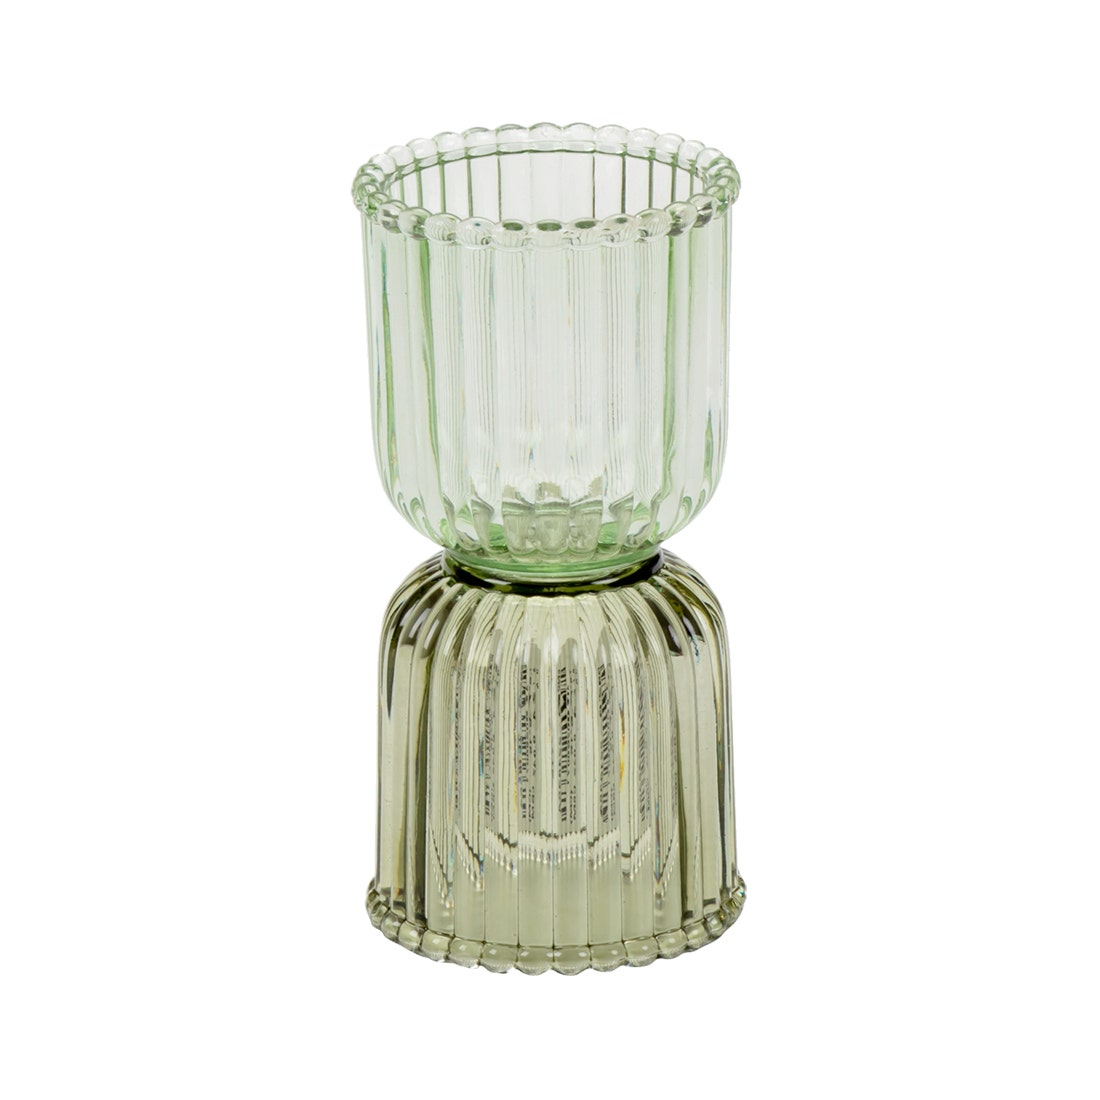 LS CANDLE HOLDER #GM26-224835A GREEN TRANSPARENT GLASS